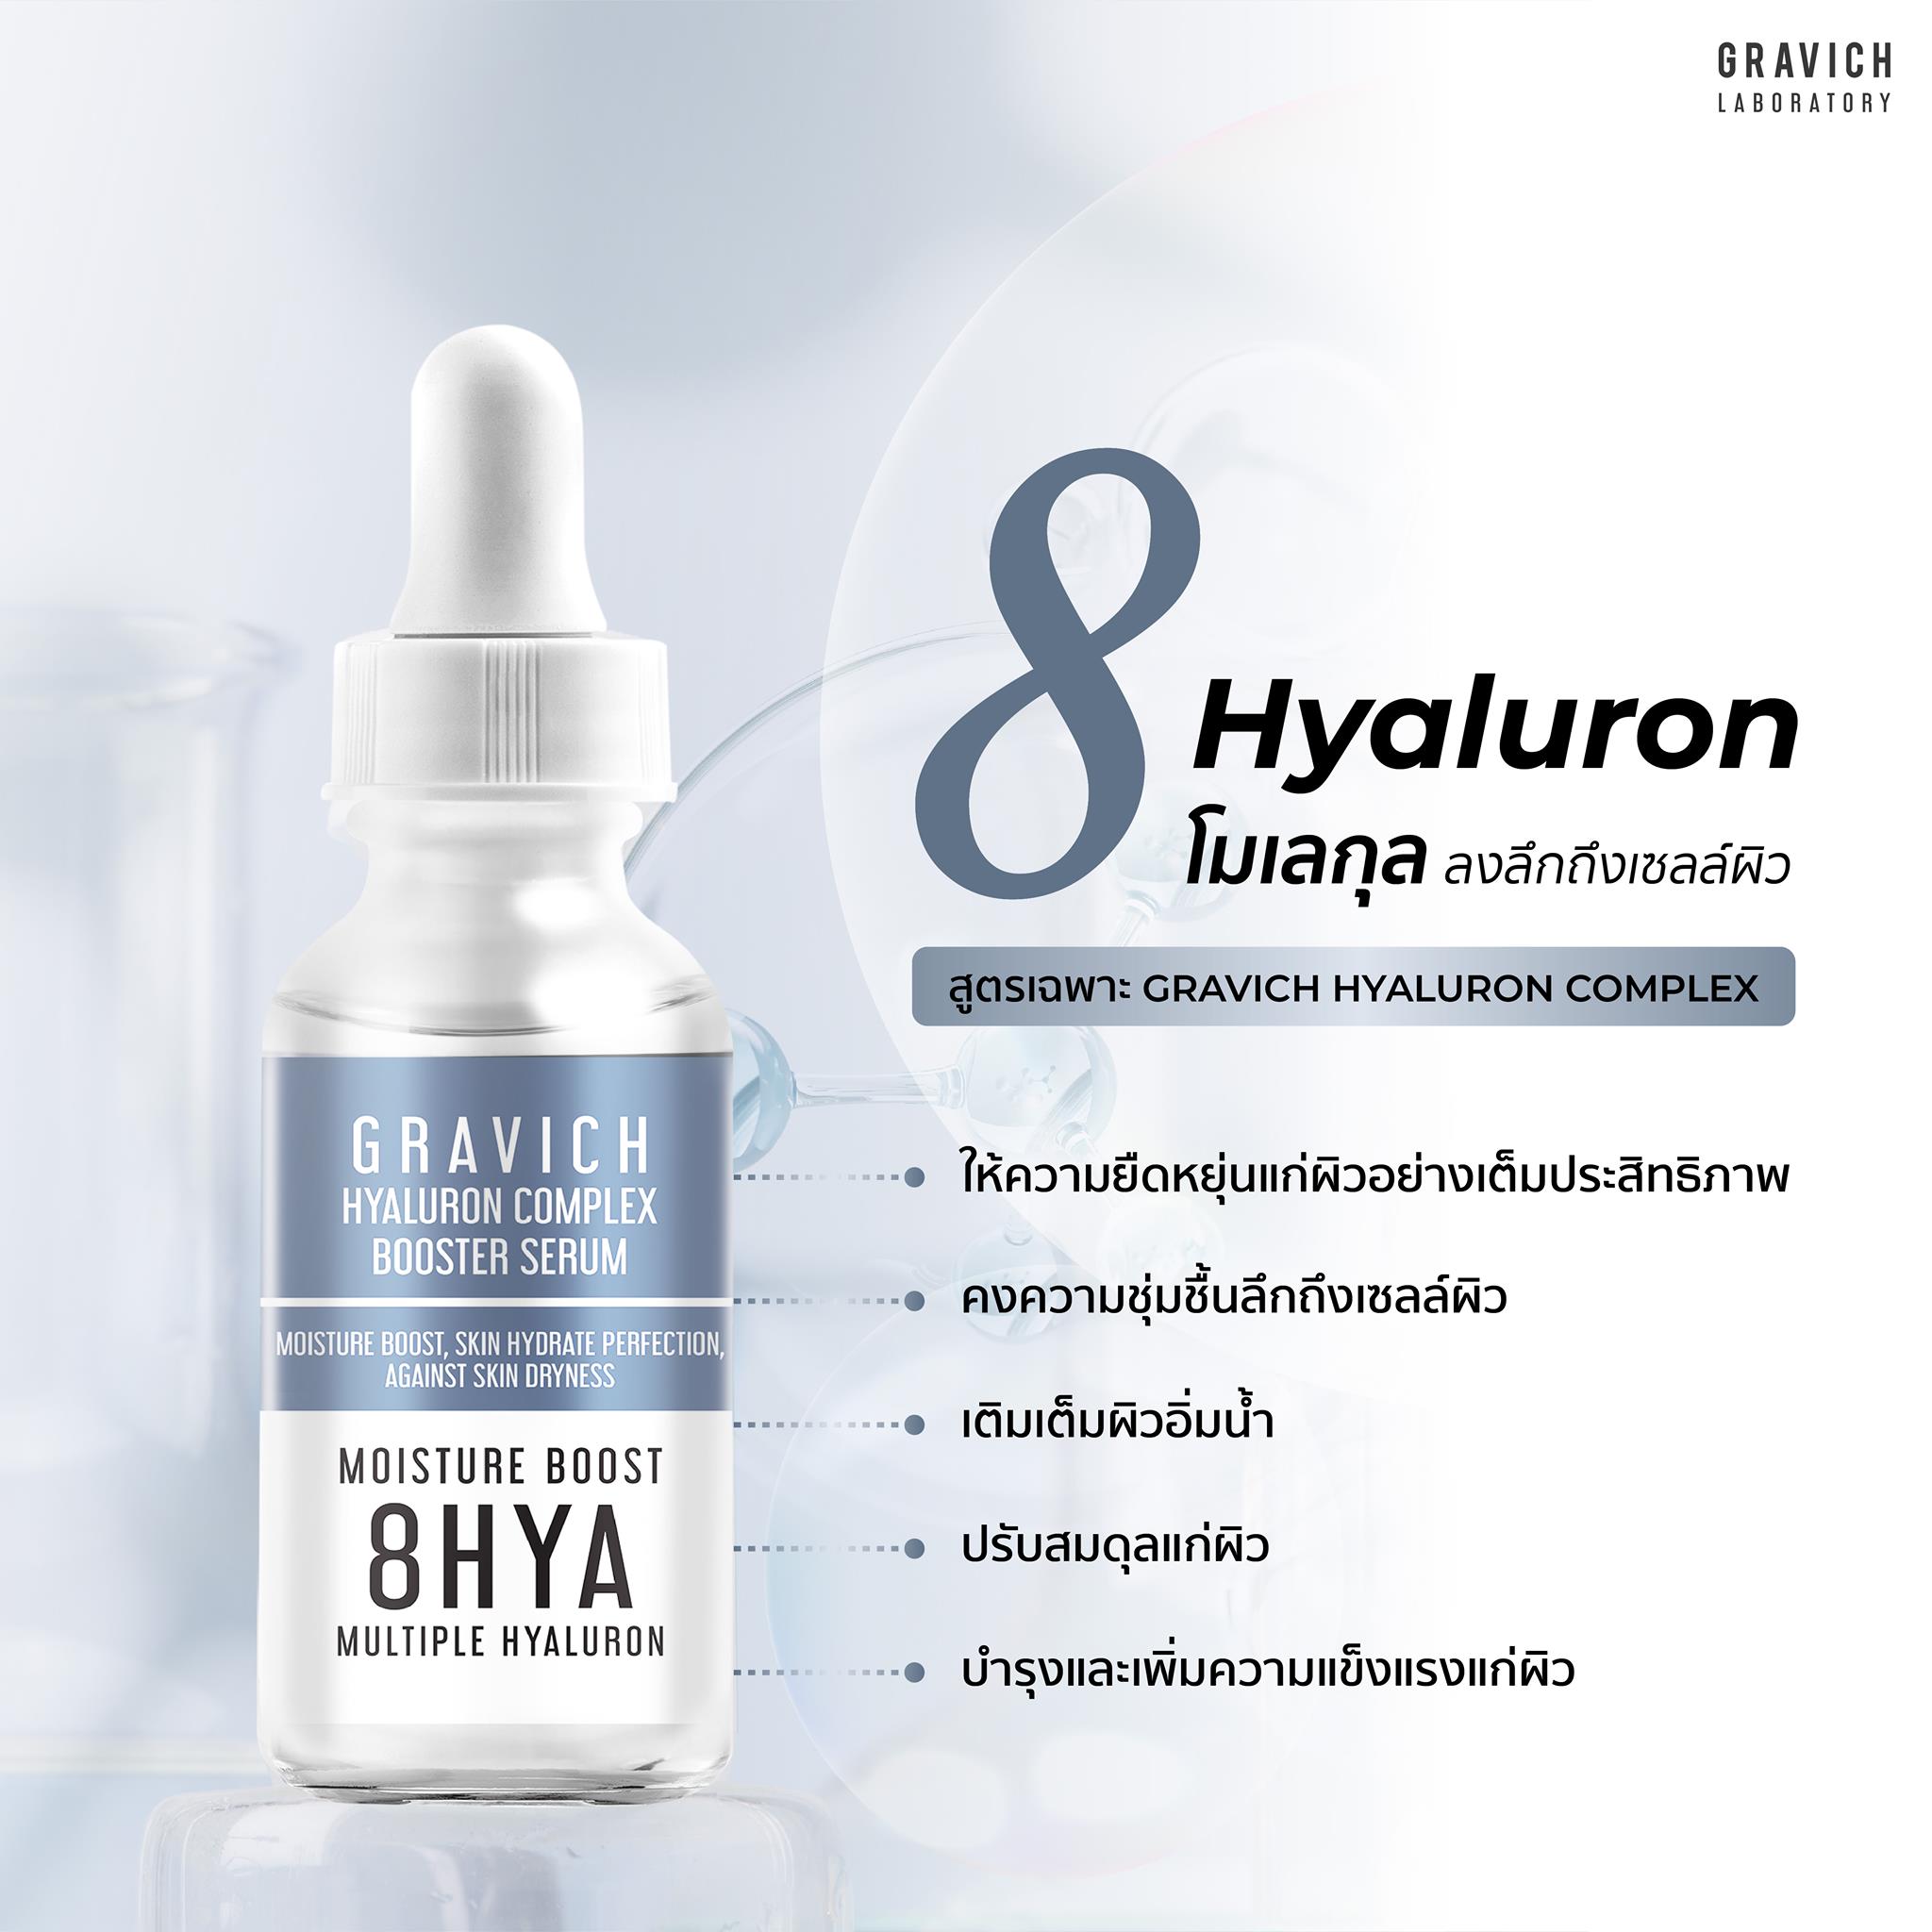  Gravich Hyaluron Complex Booster Serum